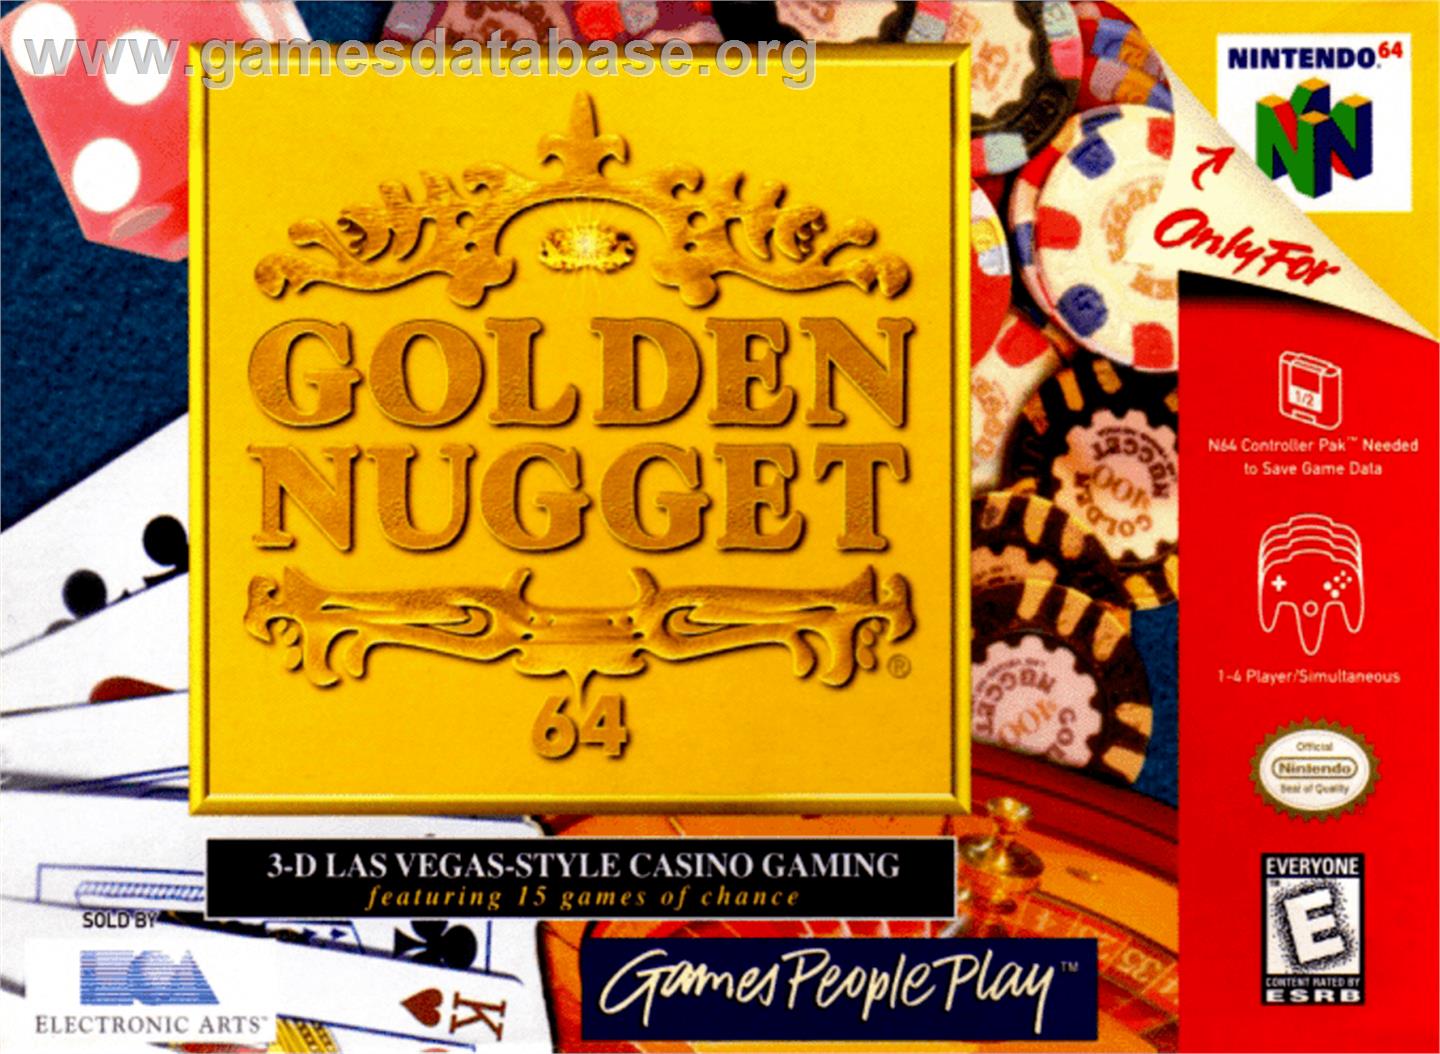 Golden Nugget 64 - Nintendo N64 - Artwork - Box